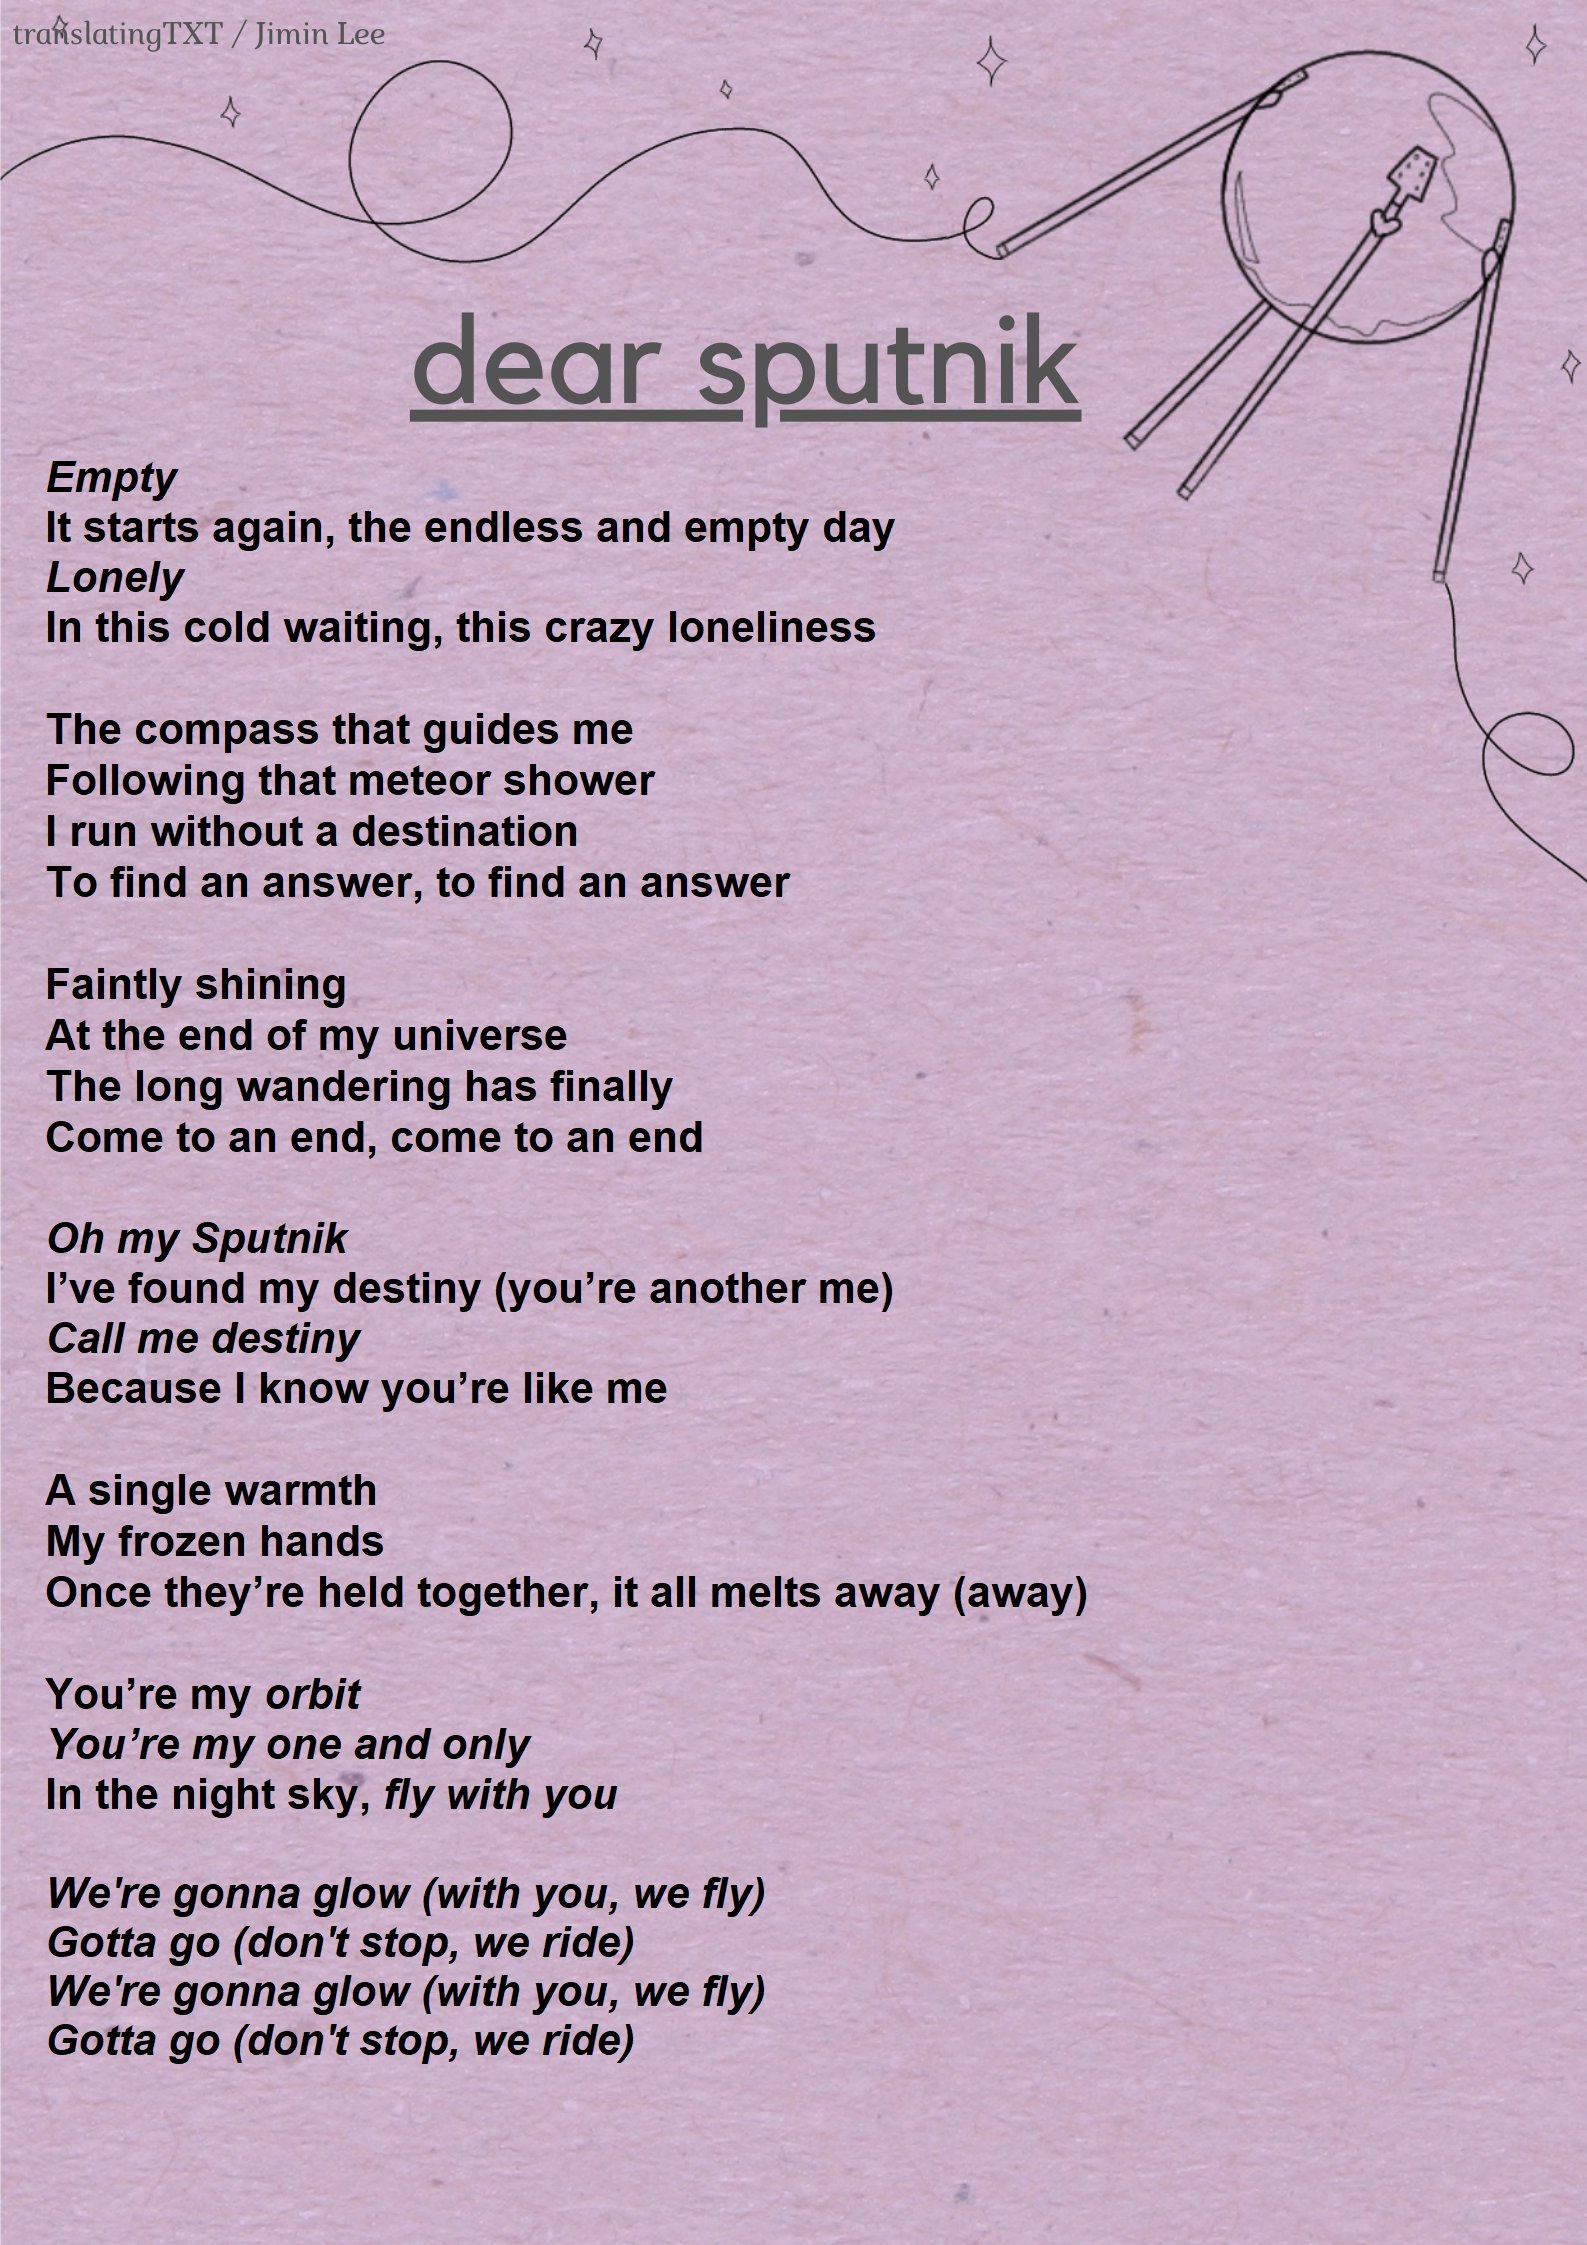 Dear sputnik txt lyrics